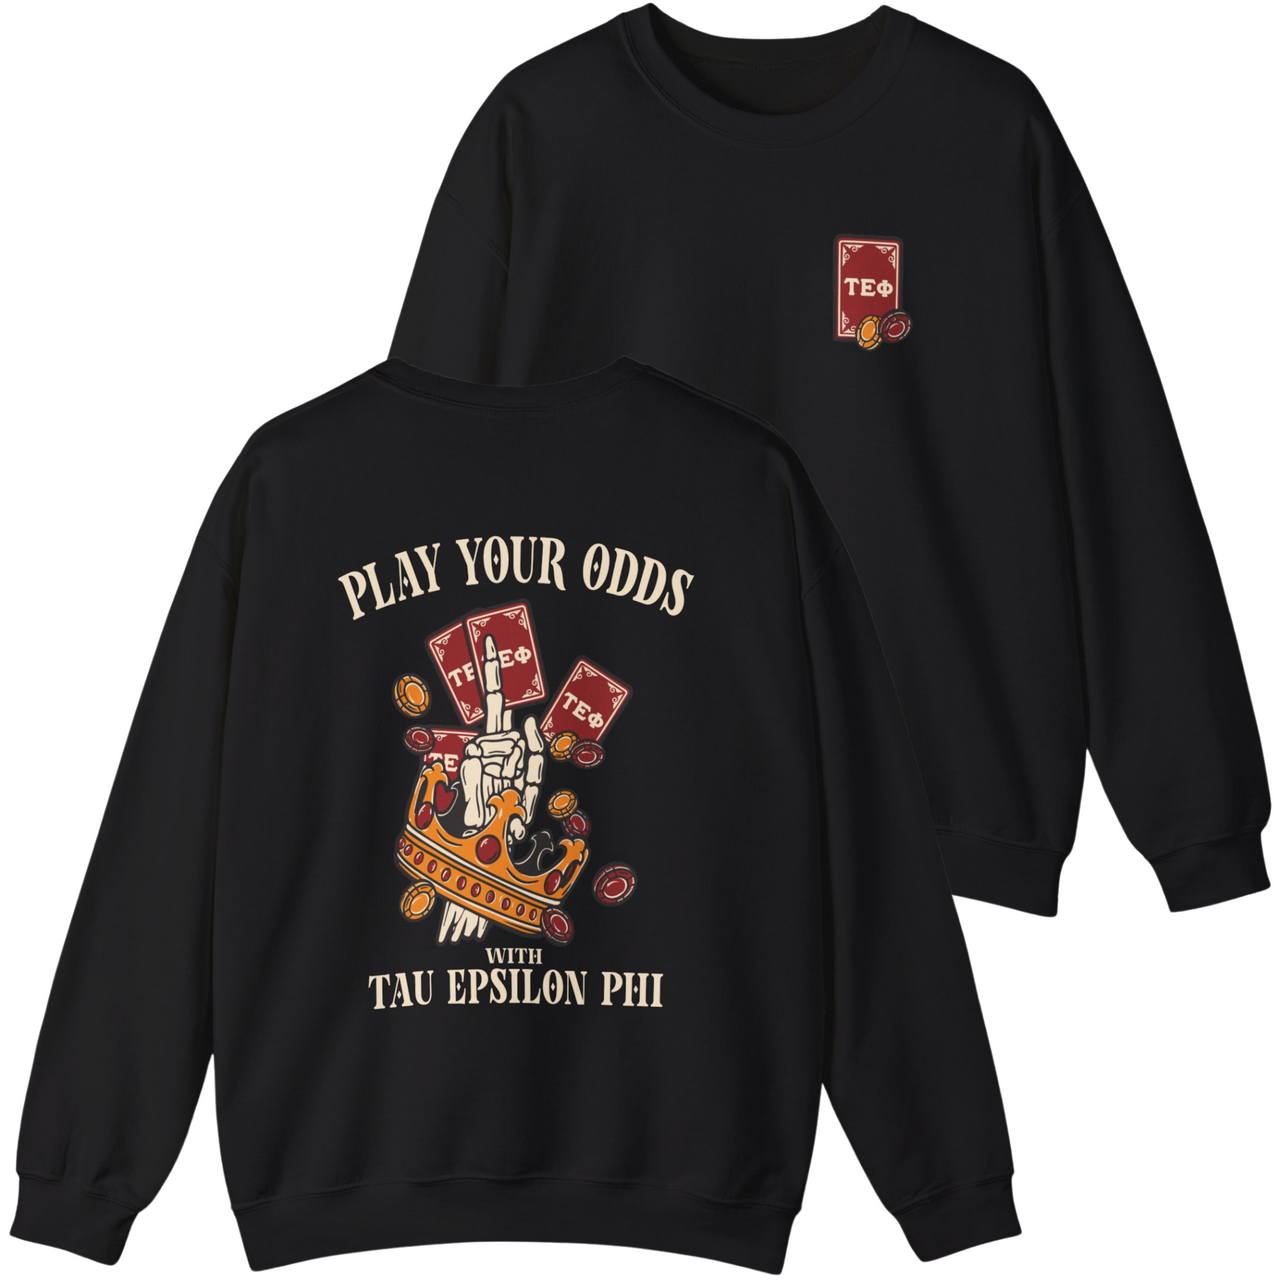 Tau Epsilon Phi Graphic Crewneck Sweatshirt | Play Your Odds